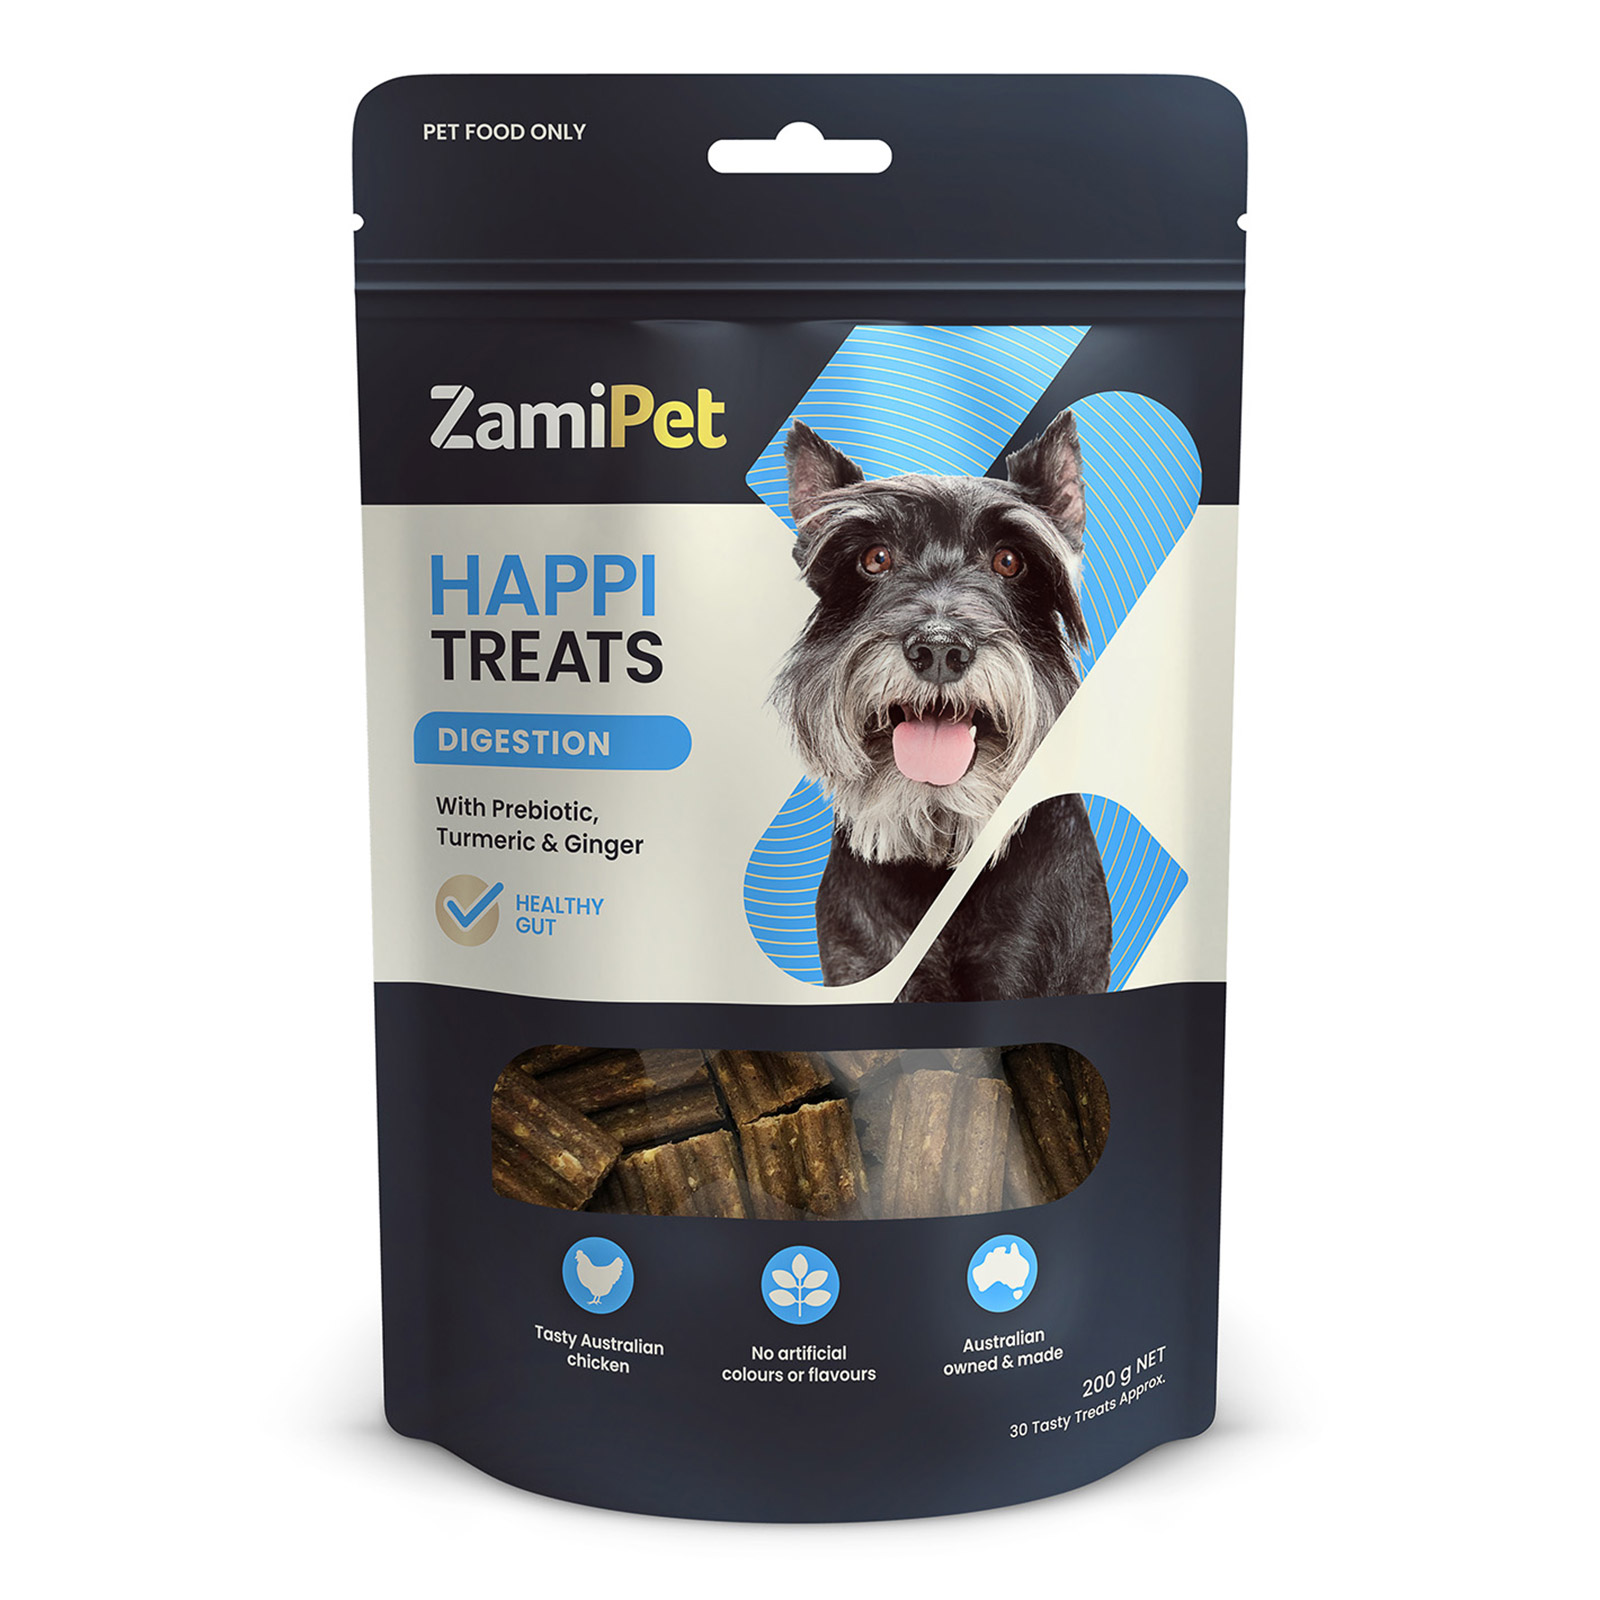 ZamiPet HappiTreats Digestion Dog Chews for Dogs